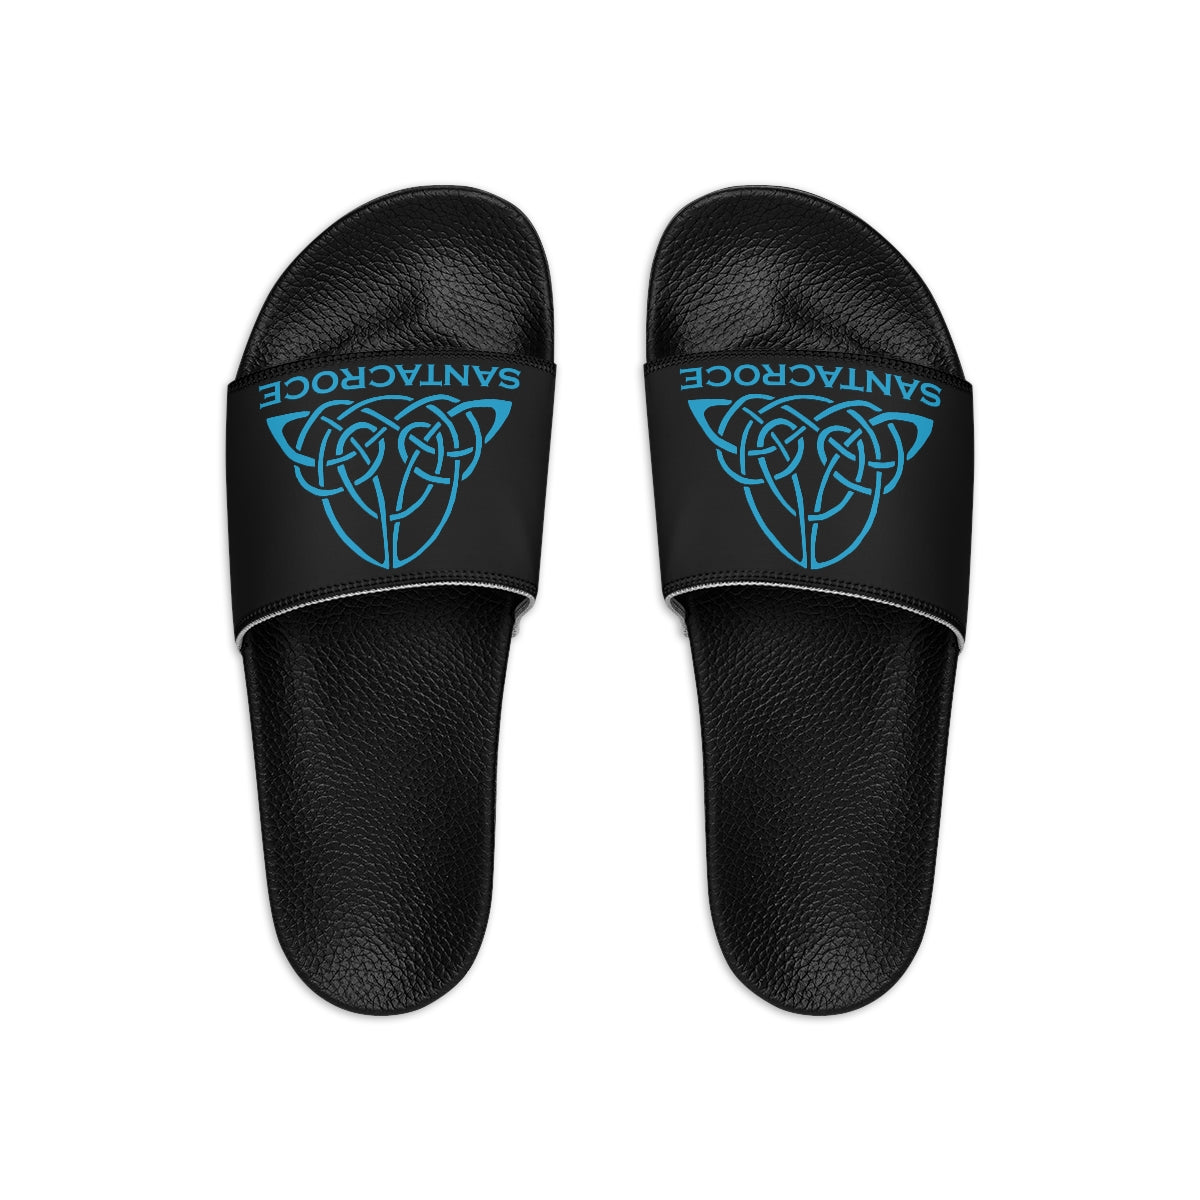 Spirited Soles Men's Slide Sandals